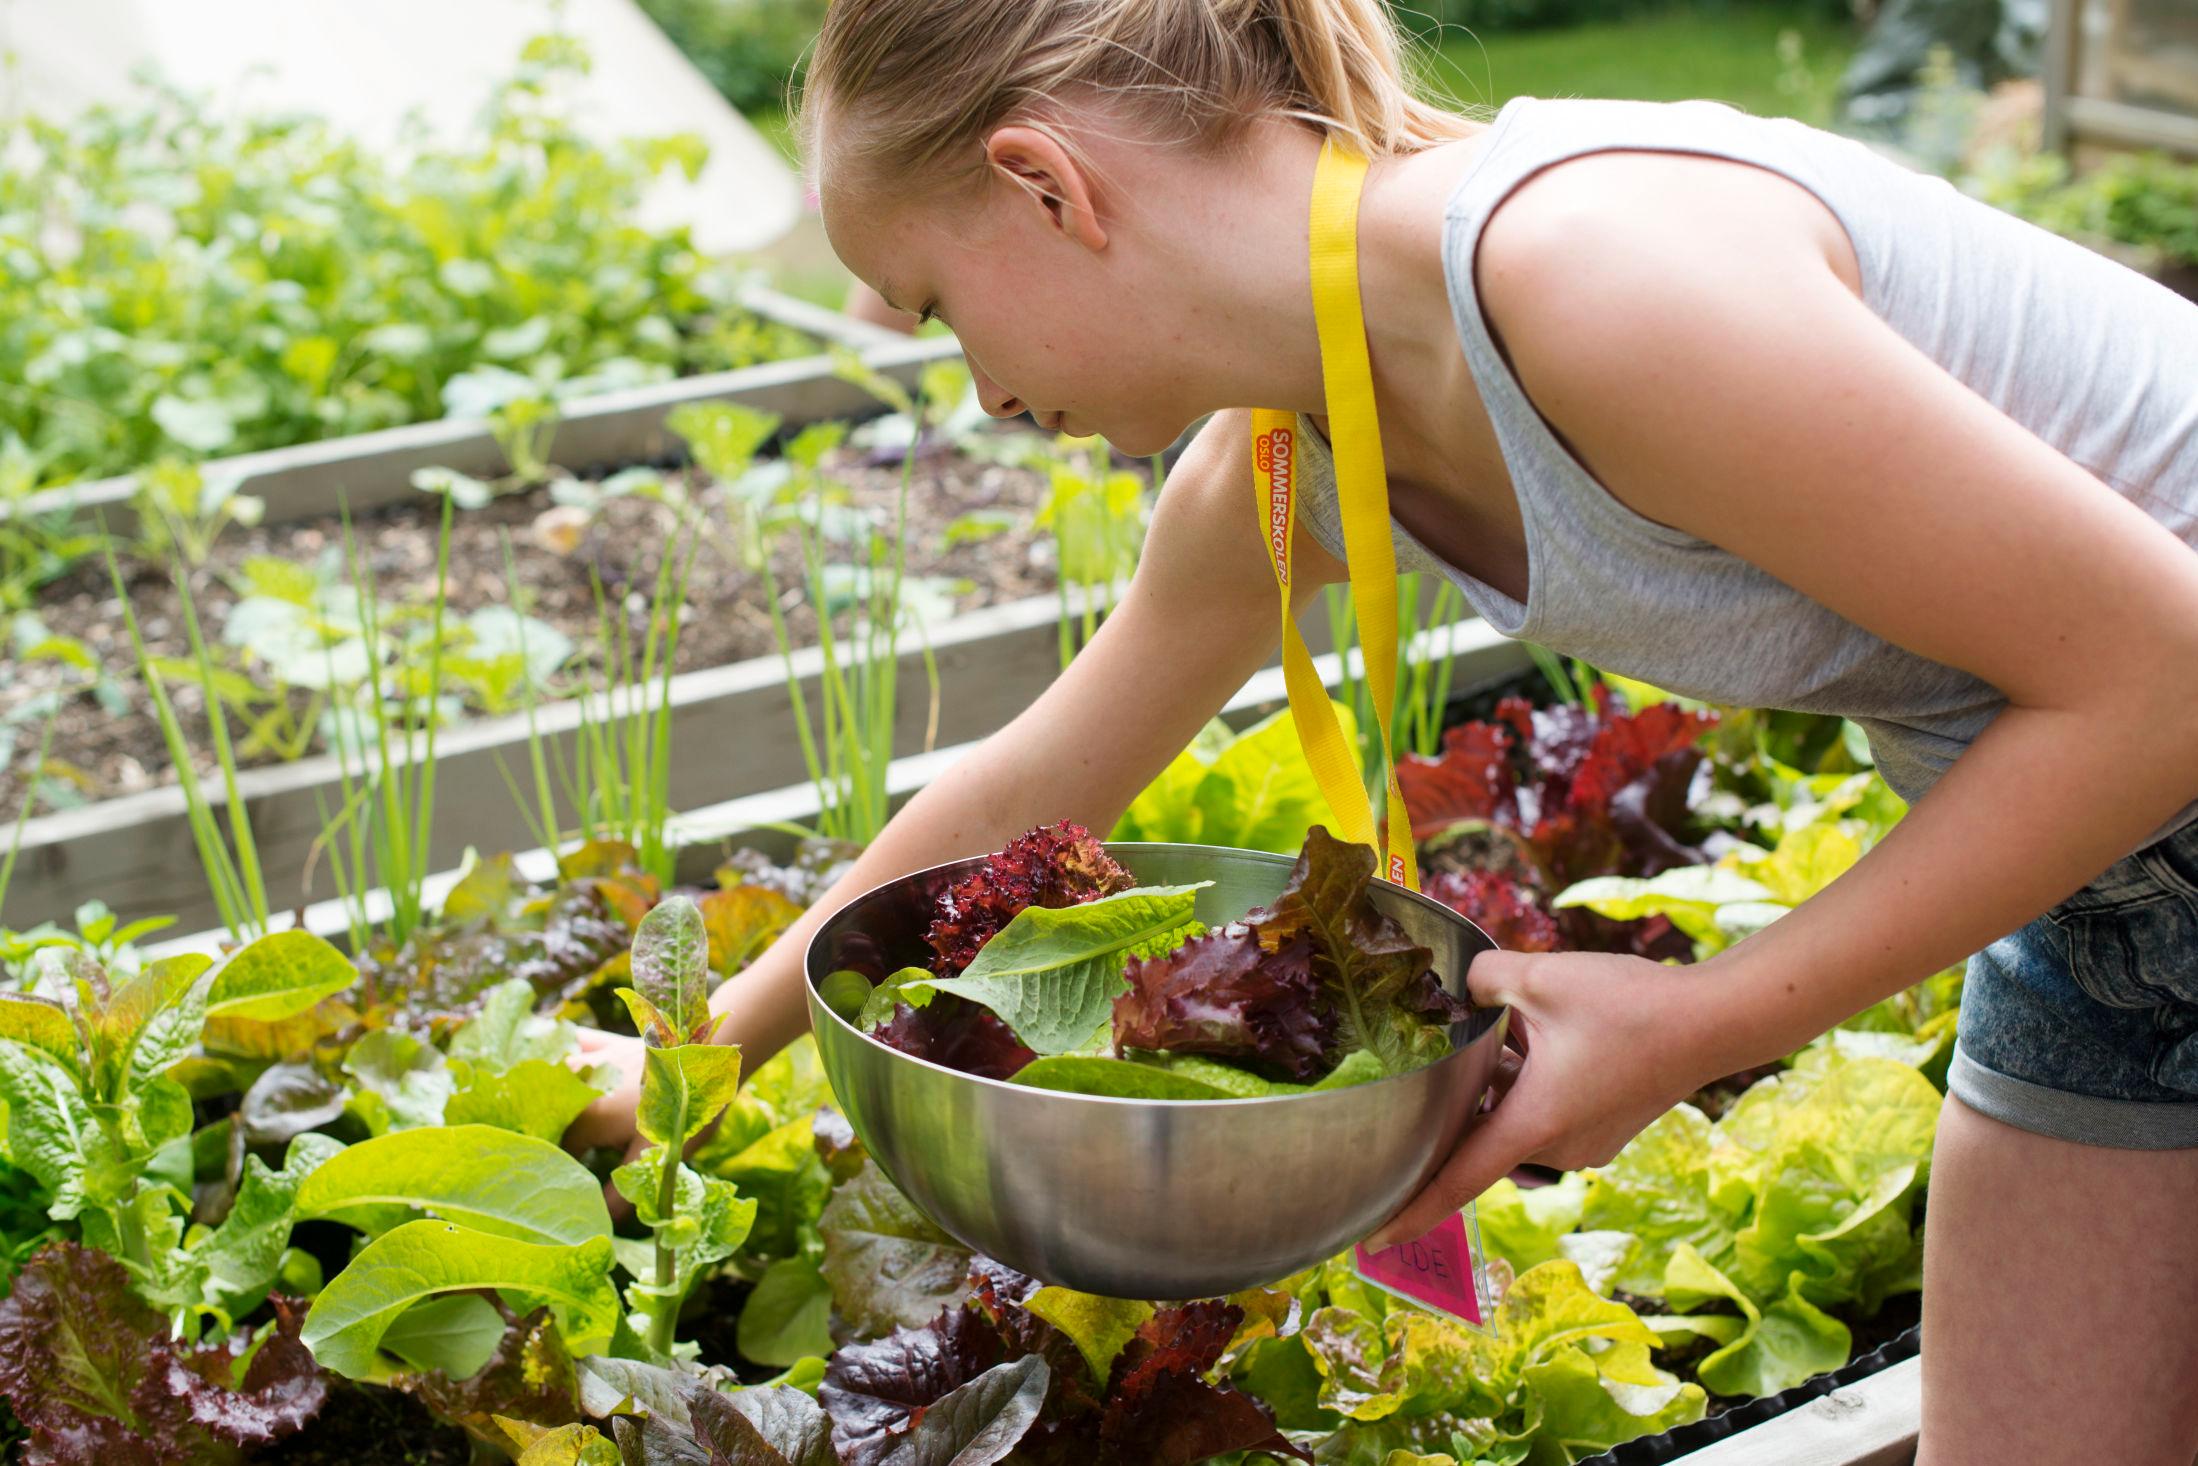 RETT FRA HAGEN: Hilde plukker salat til maten fra skolehagen. Foto: Helena Krekling